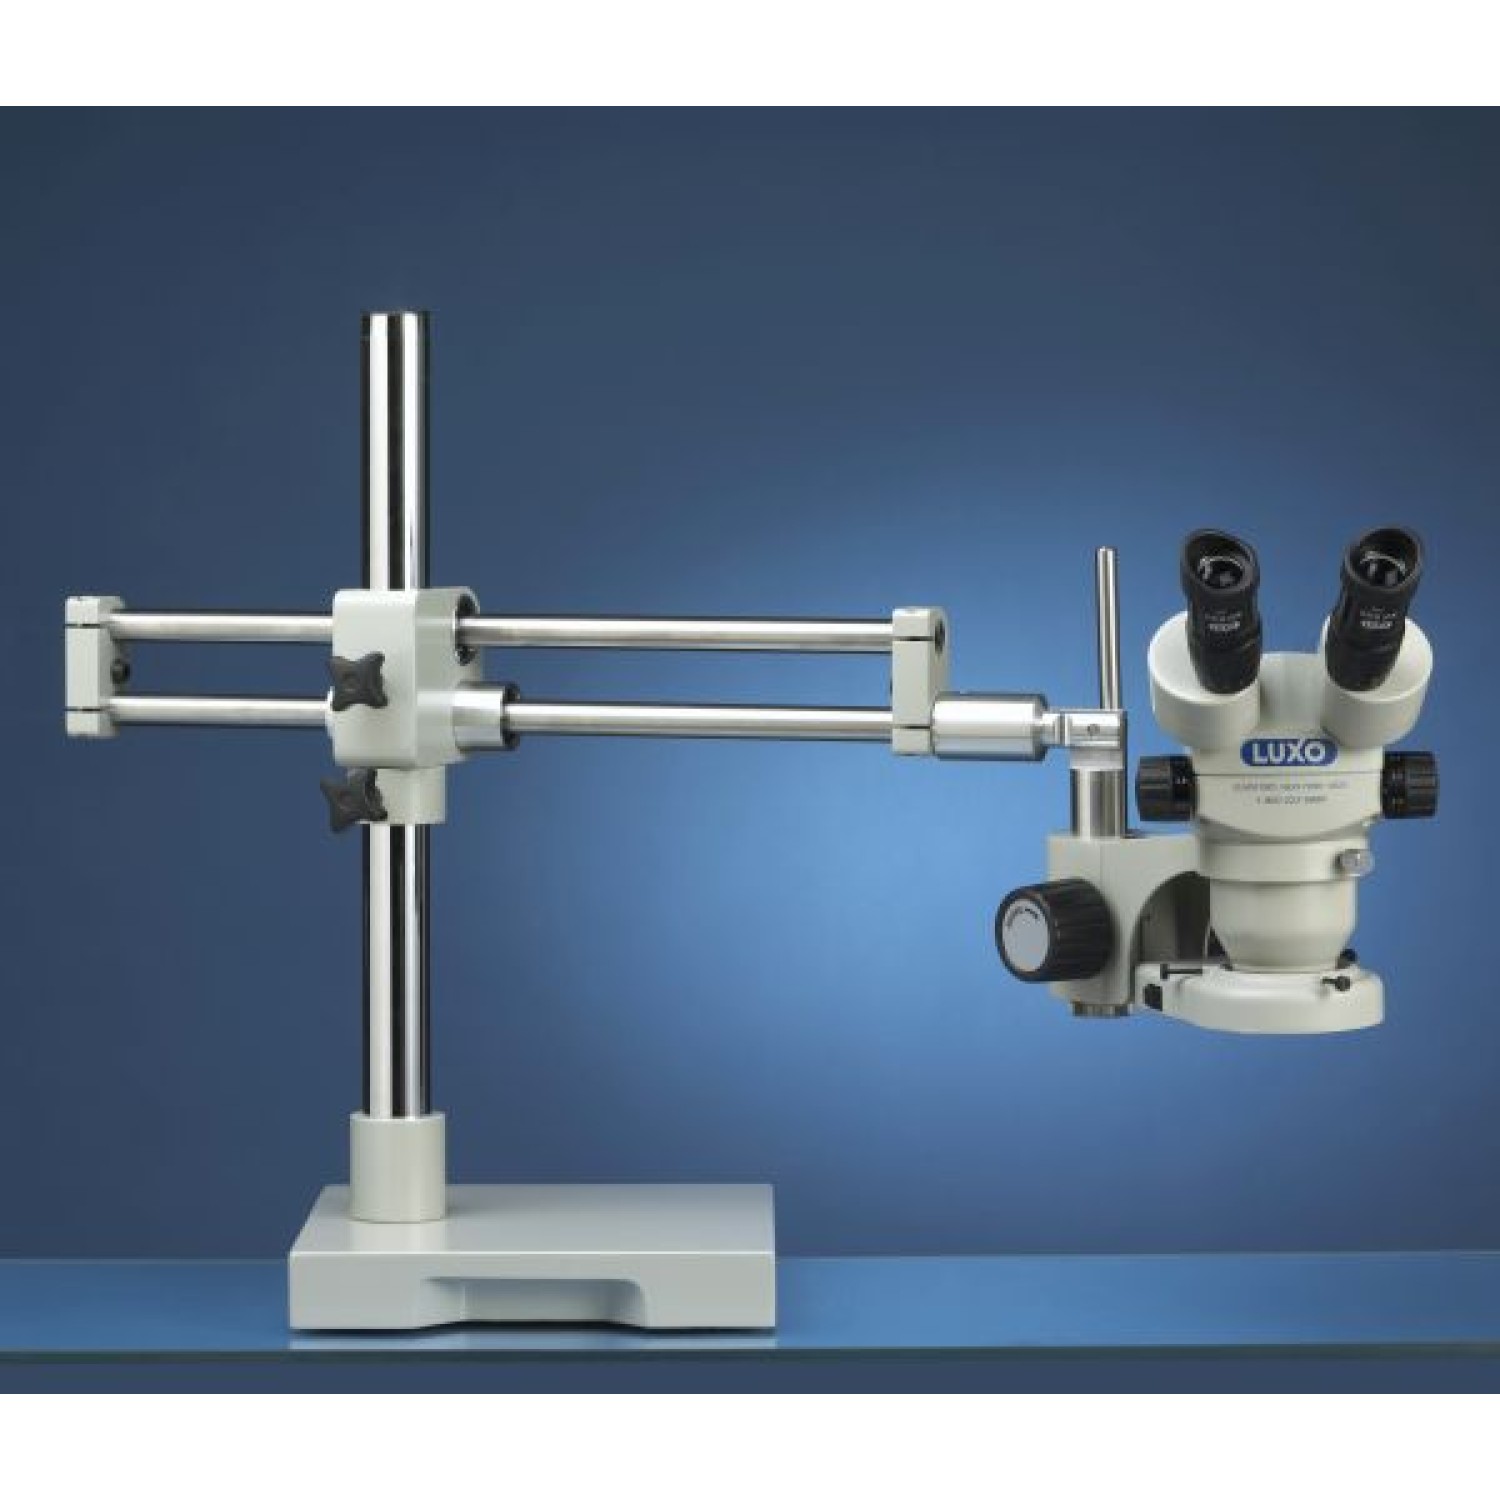 Luxo 23712RB Microscope System 273RB-FL